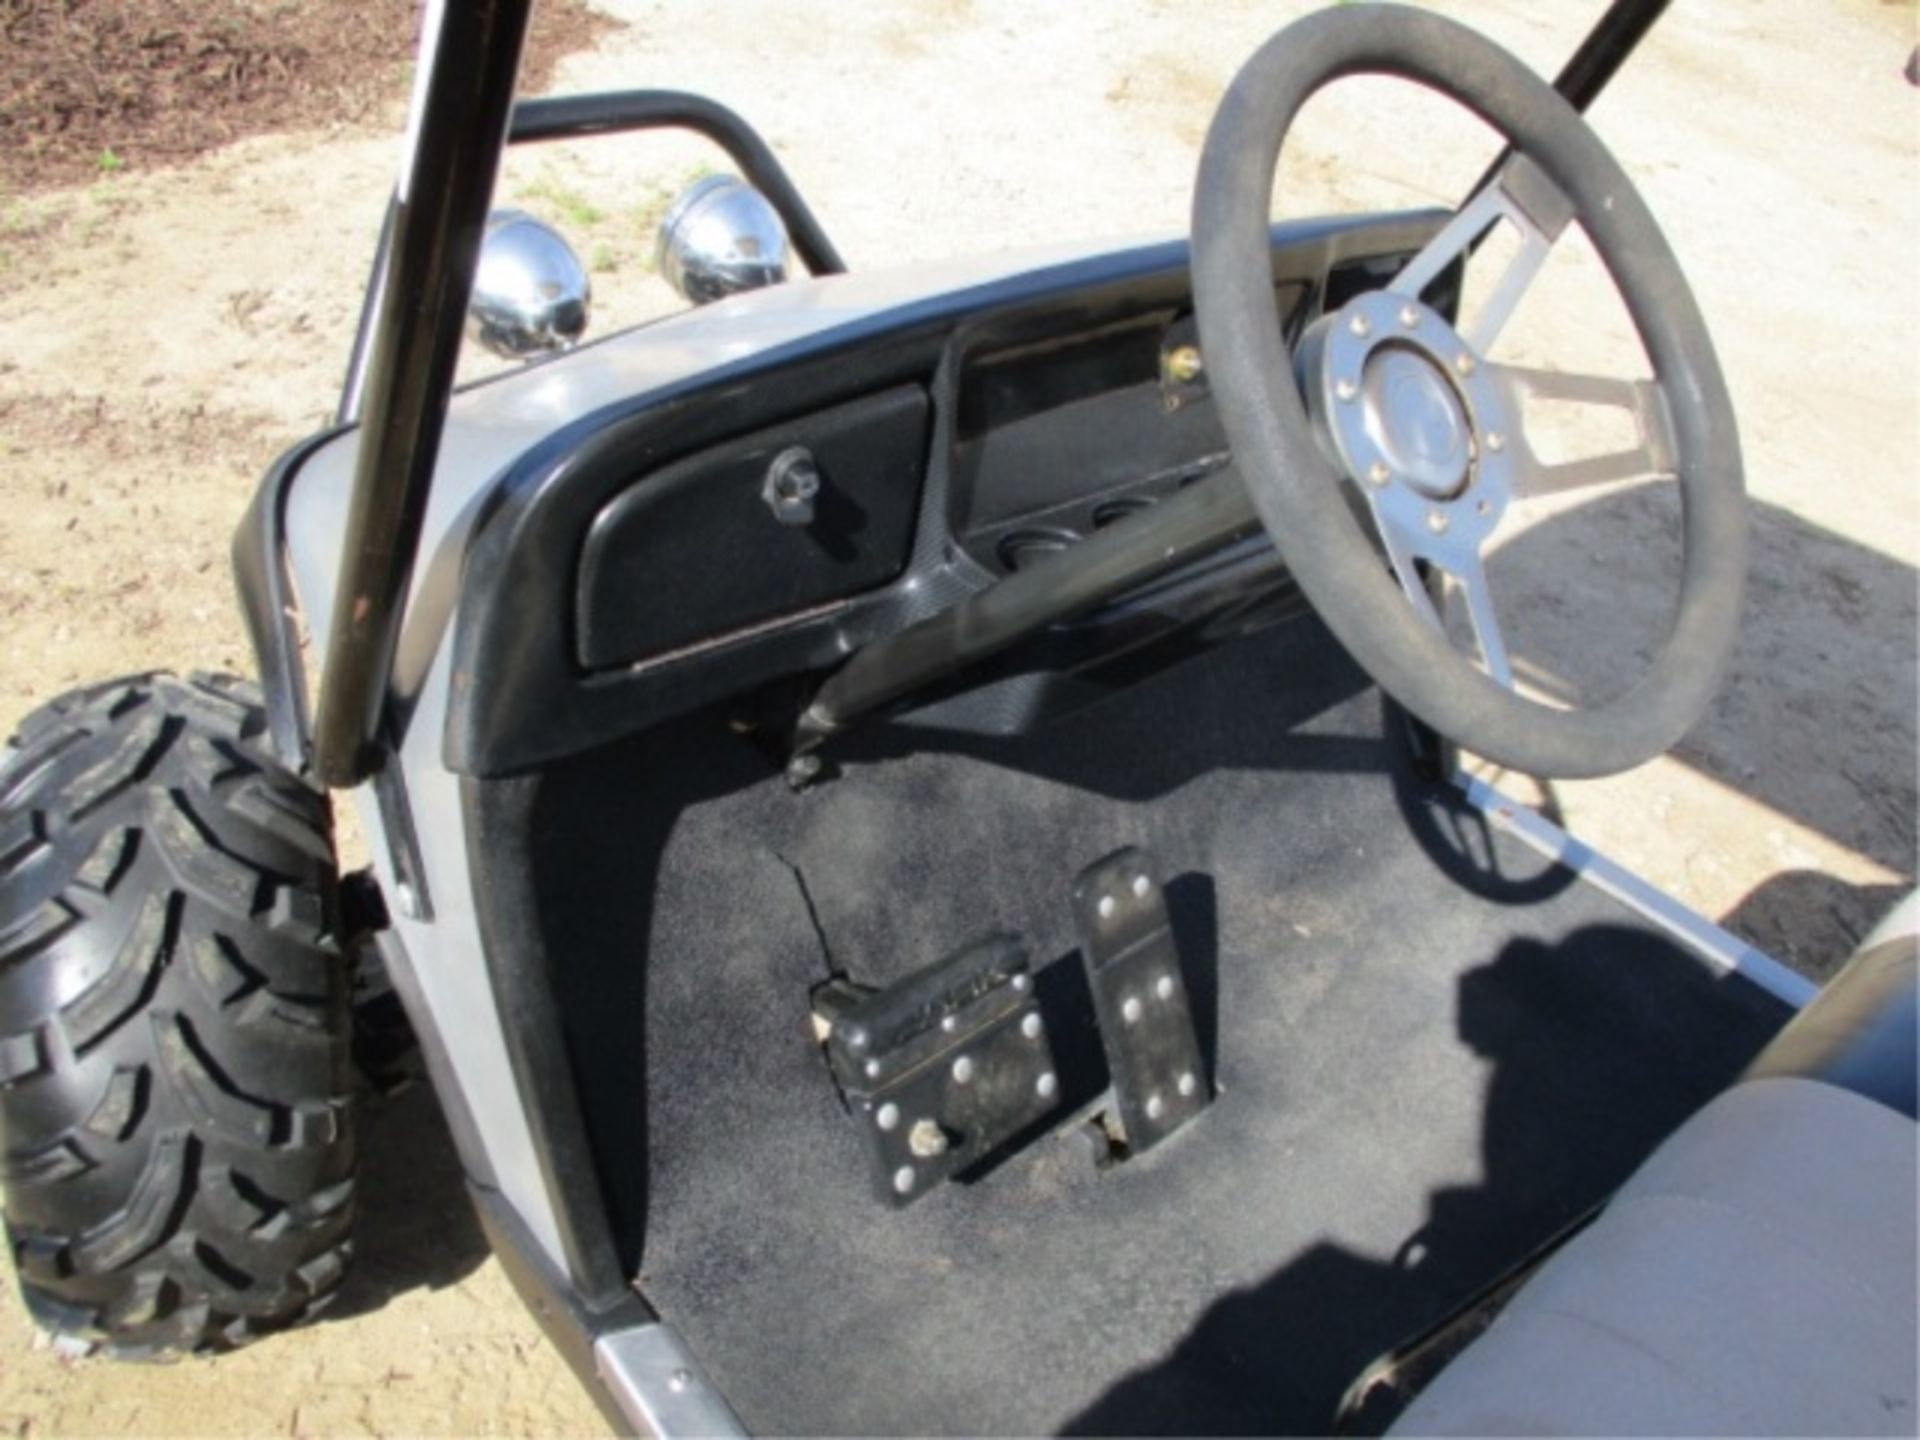 EzGo Golf Cart, 2017 Predator 670cc Gas Engine, Lift Kit, Custom Roll-Cage W/Canopy, S/N: 912224 - Image 13 of 39